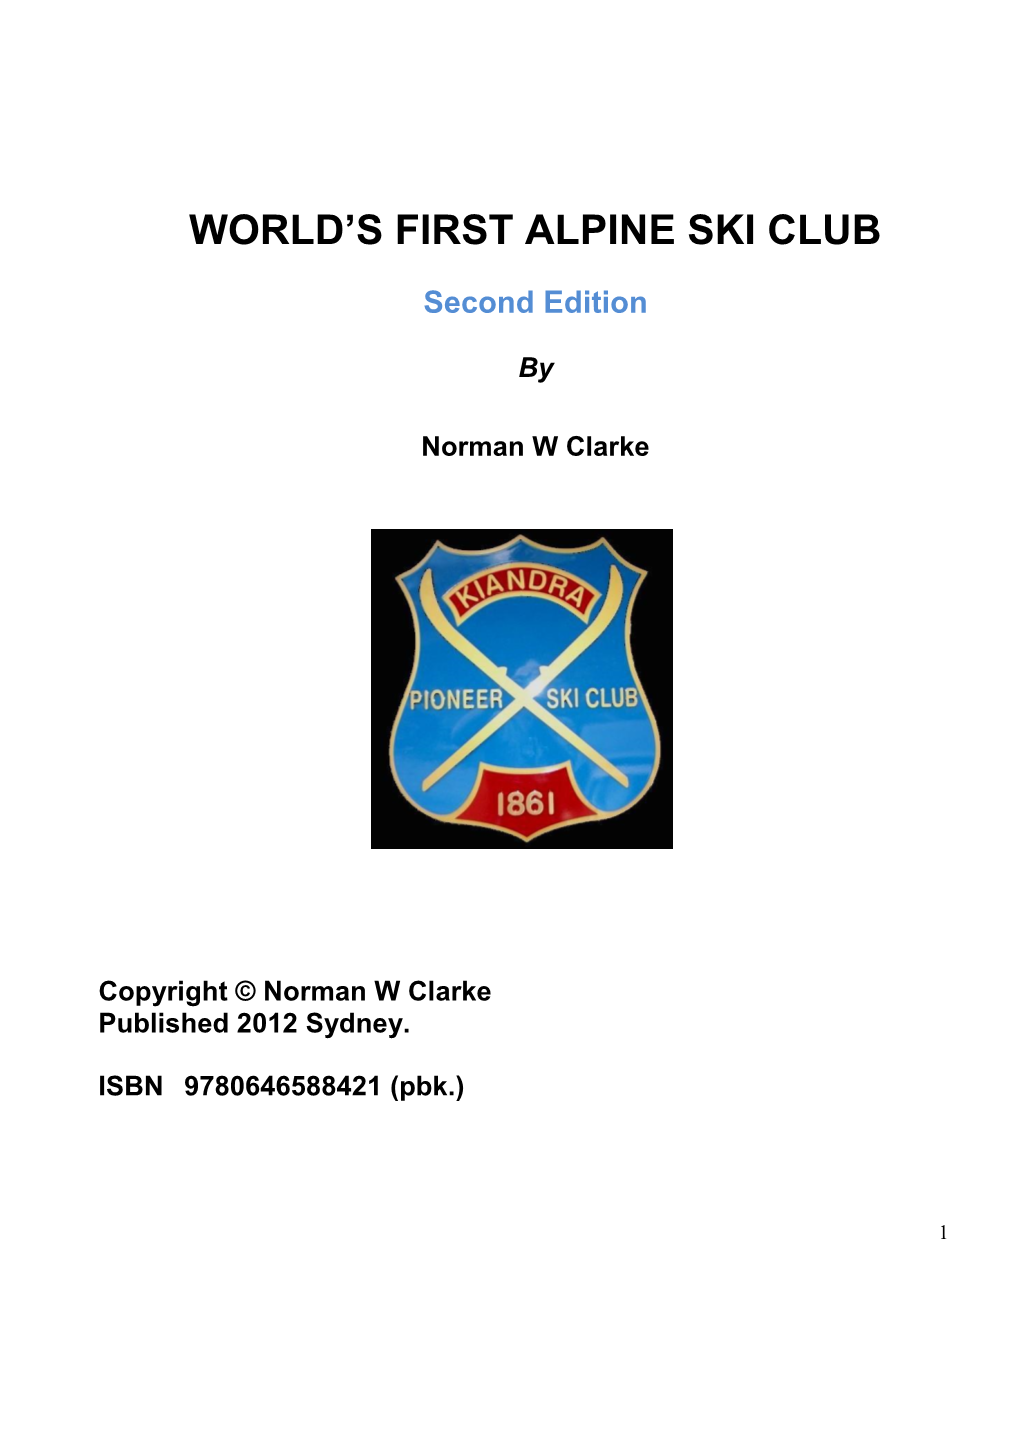 World's First Alpine Ski Club